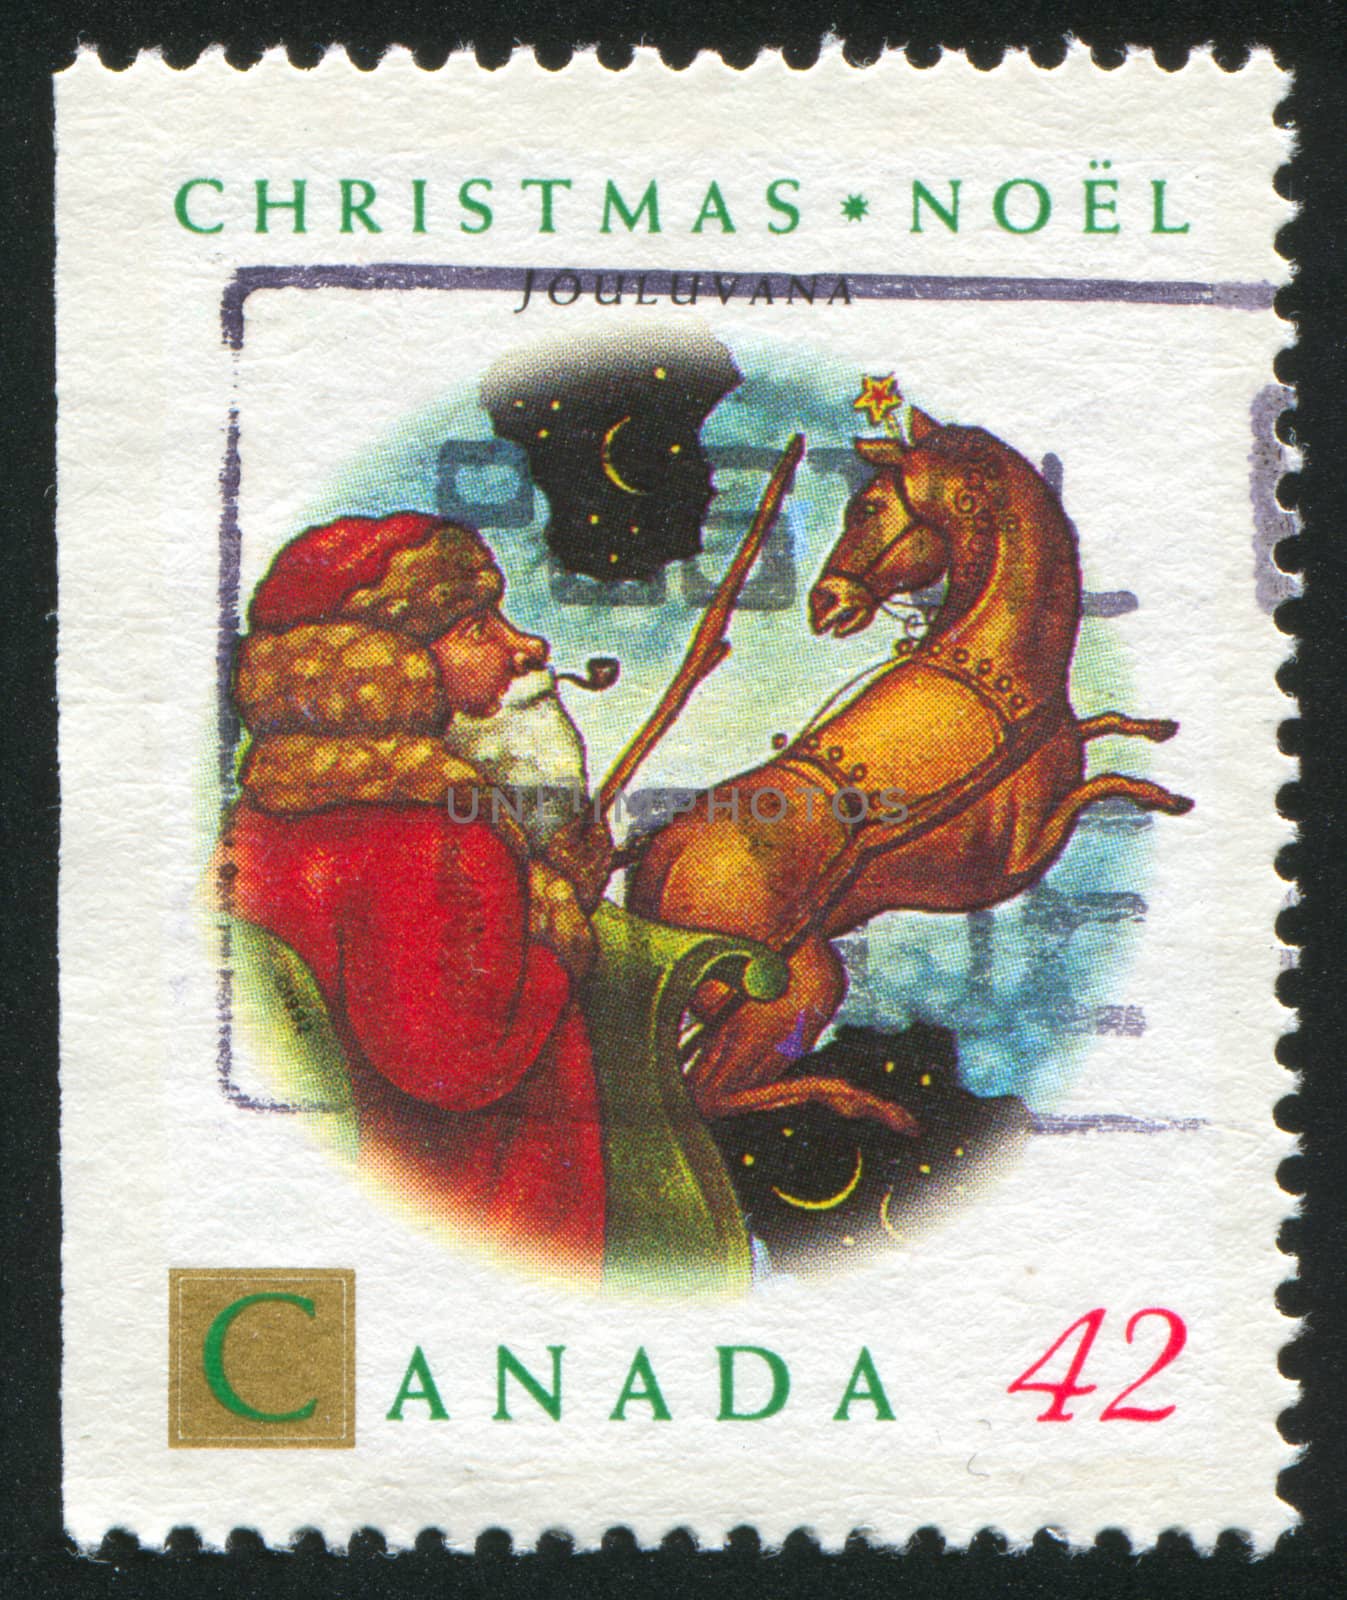 CANADA - CIRCA 1992: stamp printed by Canada, shows Santa Claus, circa 1992